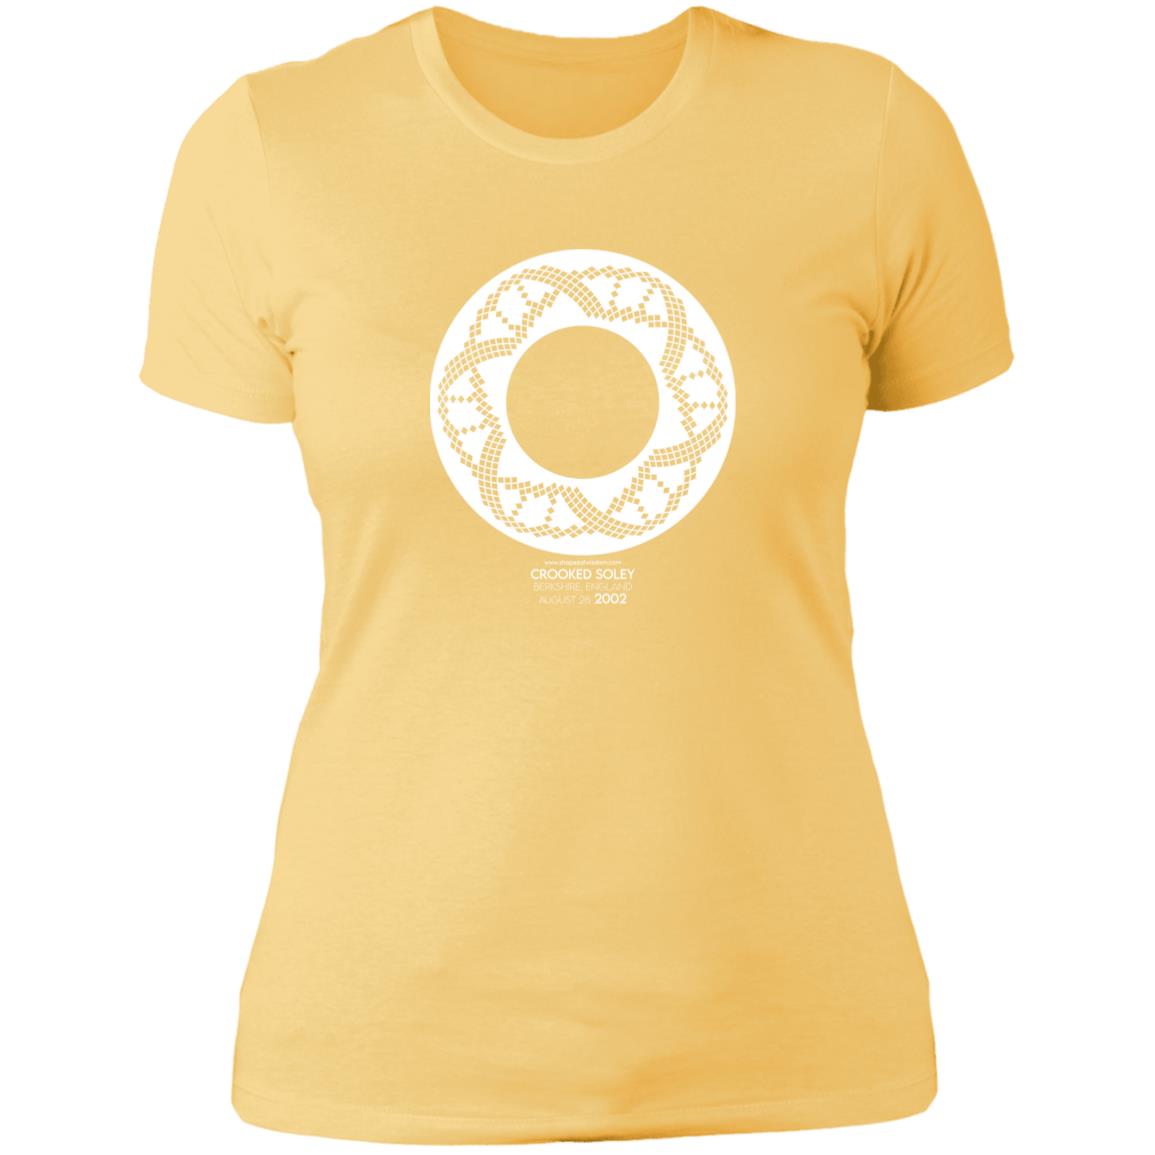 Crop Circle Basic T-Shirt - Crooked Soley